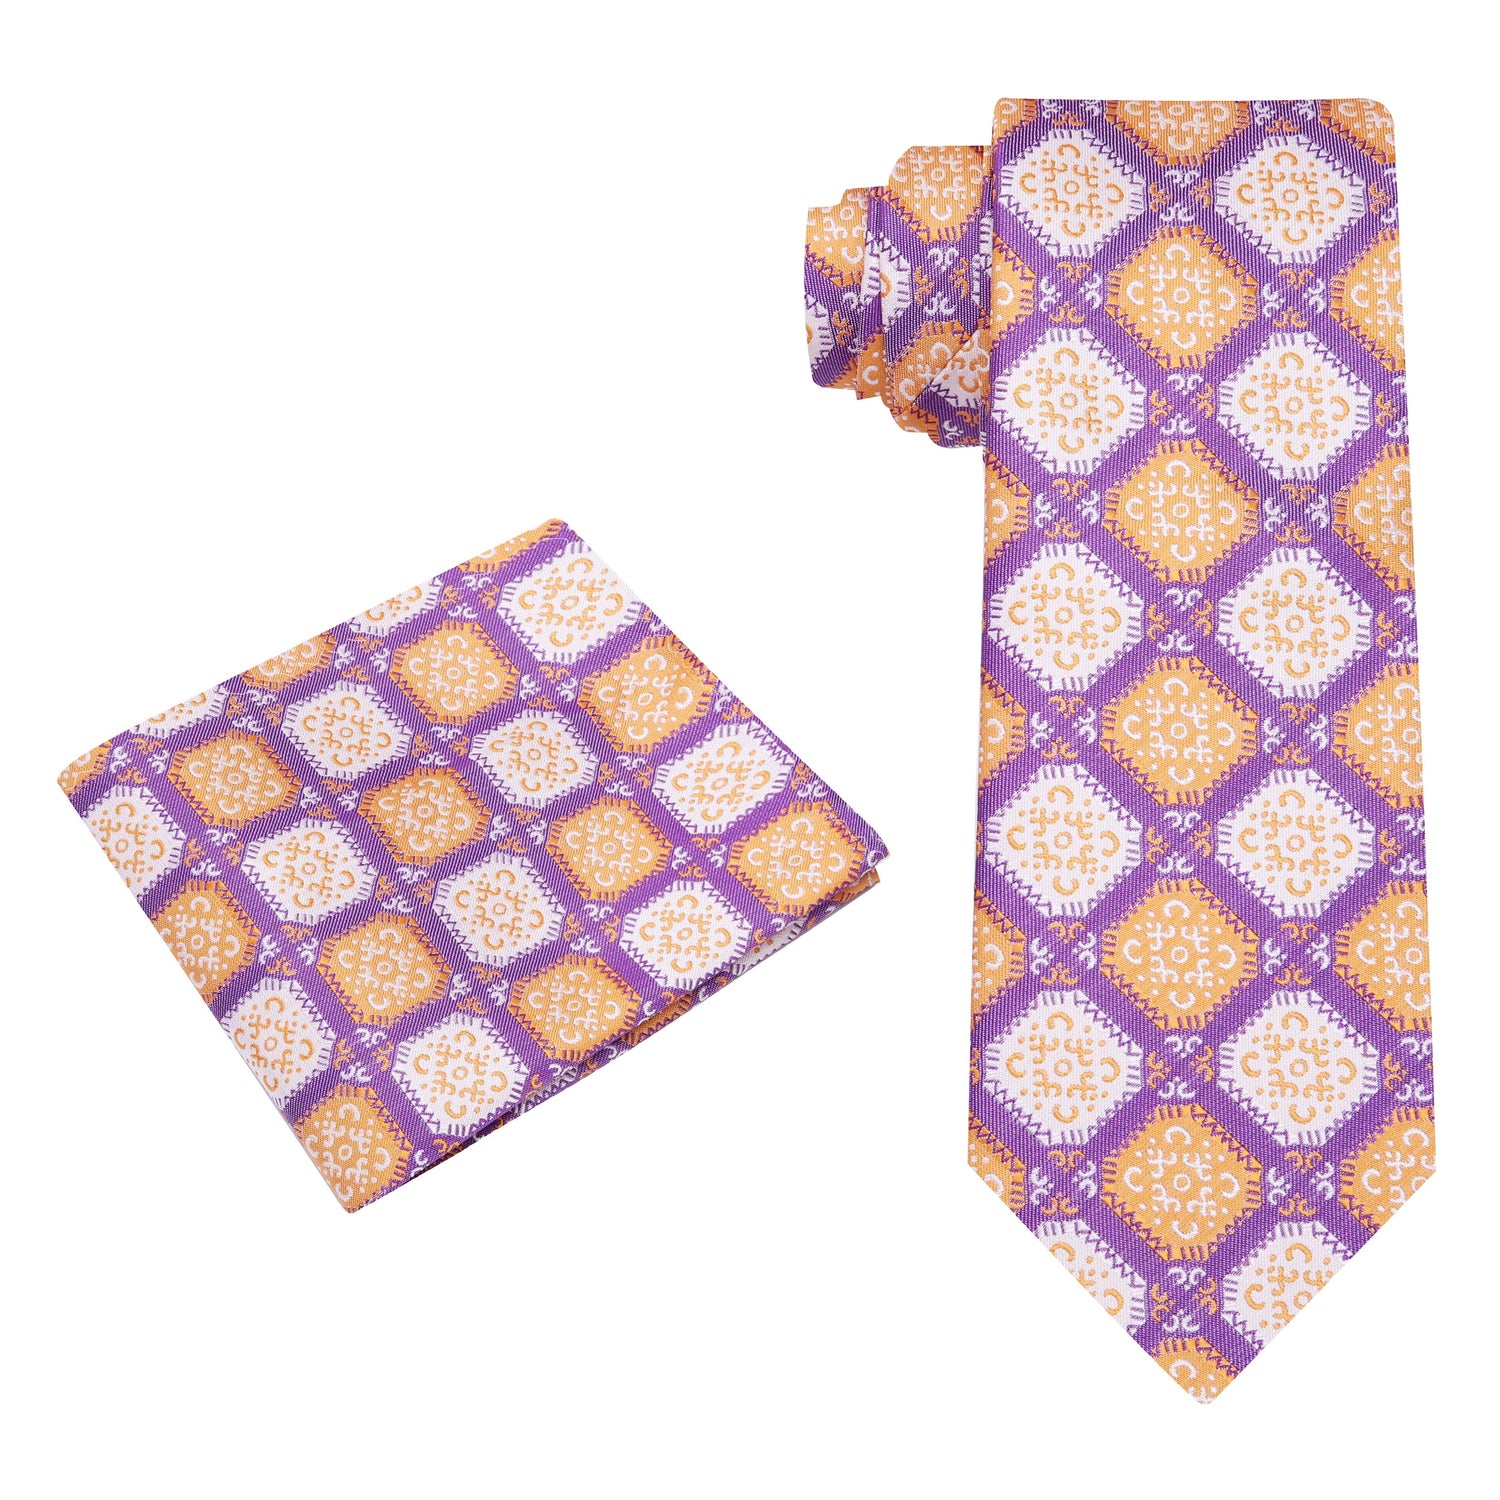 Alt View: An Orange, Purple, Cream Color Abstract Geometric Diamond Shape Silk Tie and Pocket Square